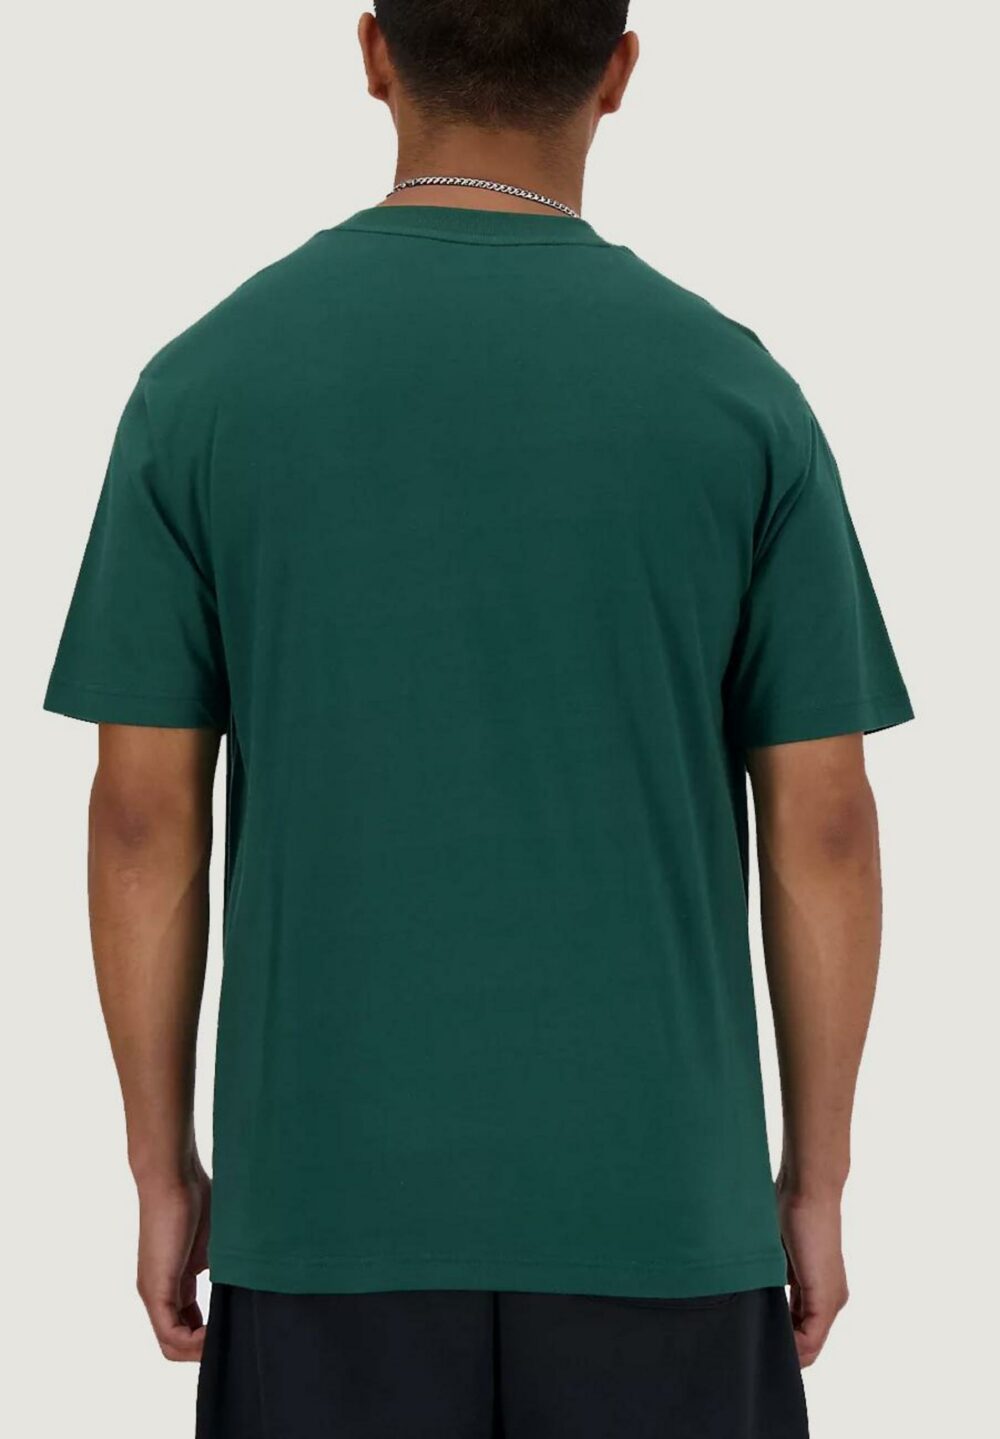 T-shirt New Balance  Verde Scuro - Foto 3